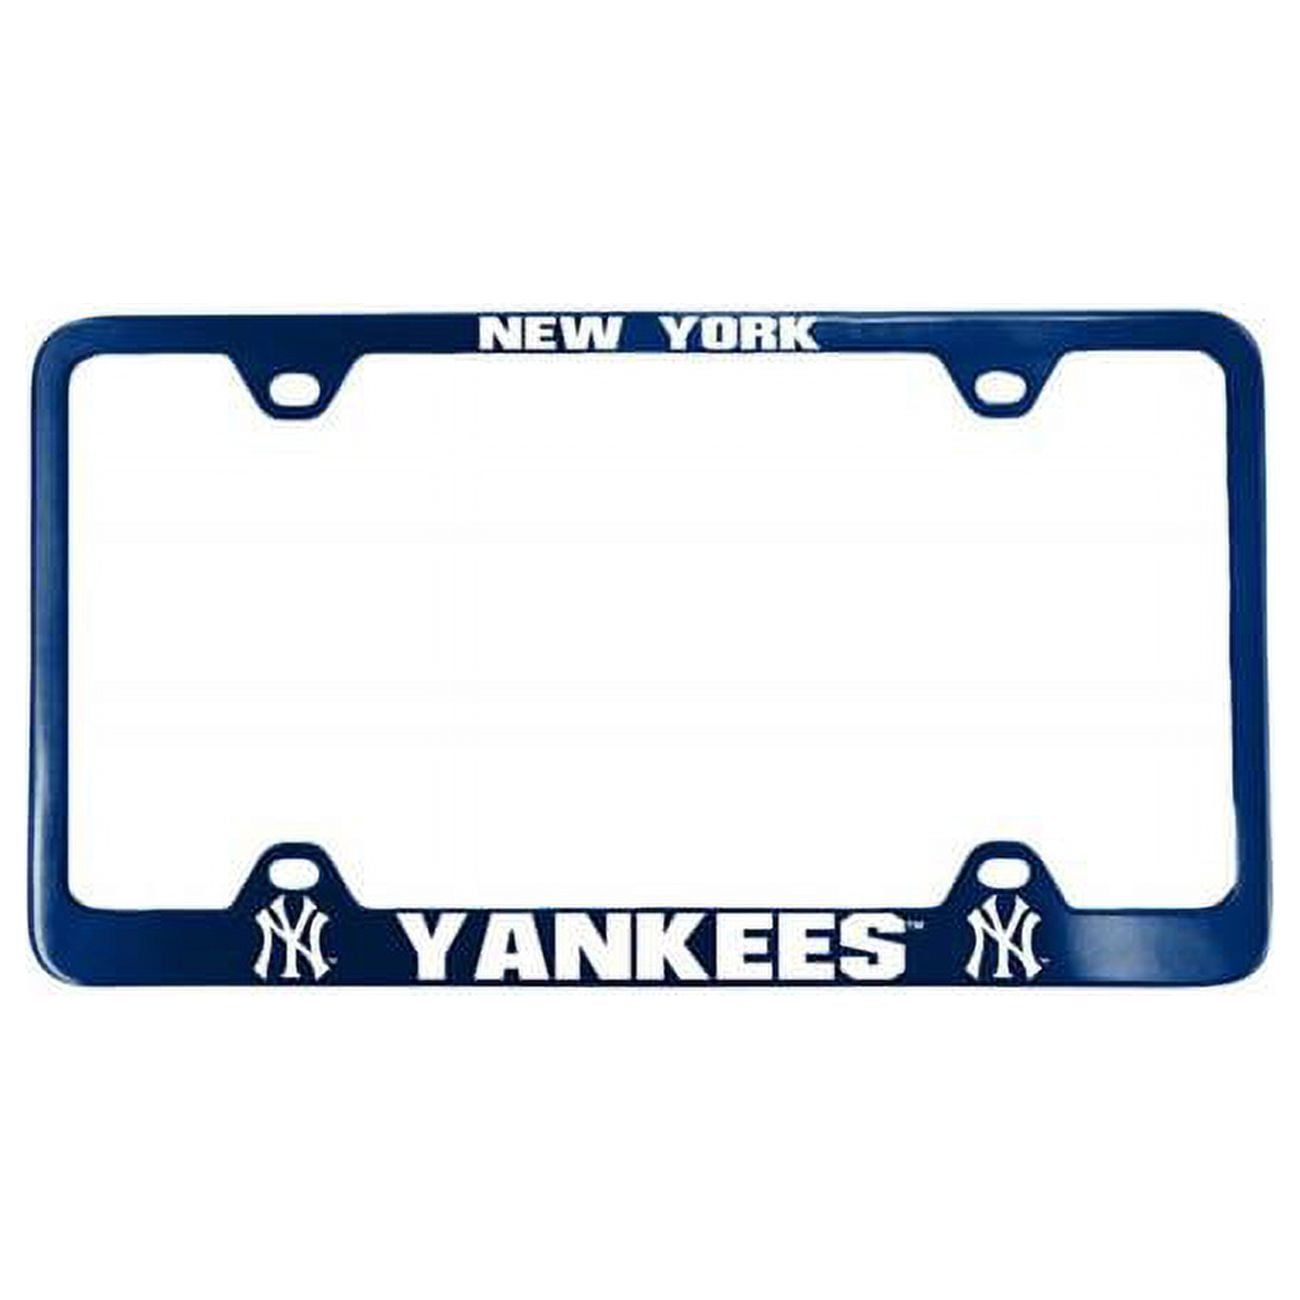 Fremont Die 2324561910 New York Yankees Laser Cut License Plate Frame, Blue -  Fremont Die Consumer Products Inc